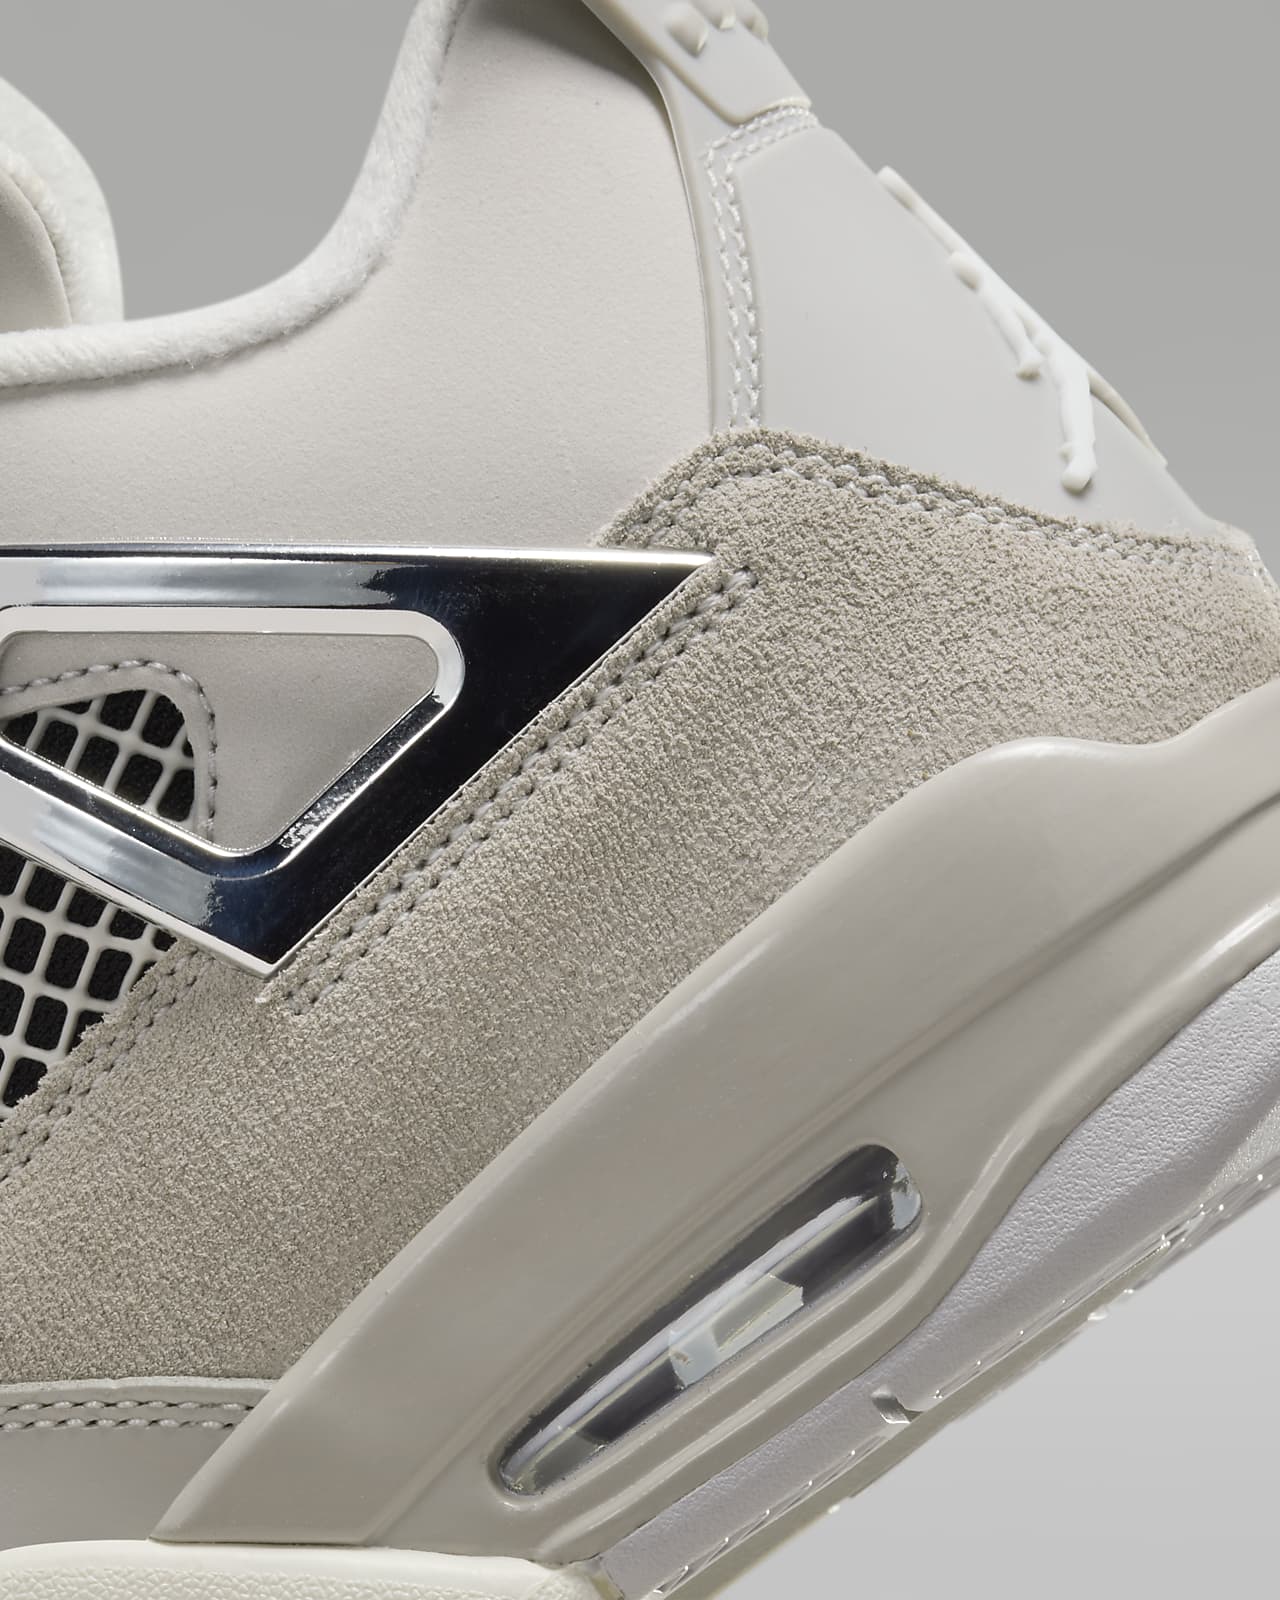 Air Jordan 4 Retro “Raptors/Drake OVO”  Jordan shoes retro, Nike shoes  women, Hype shoes